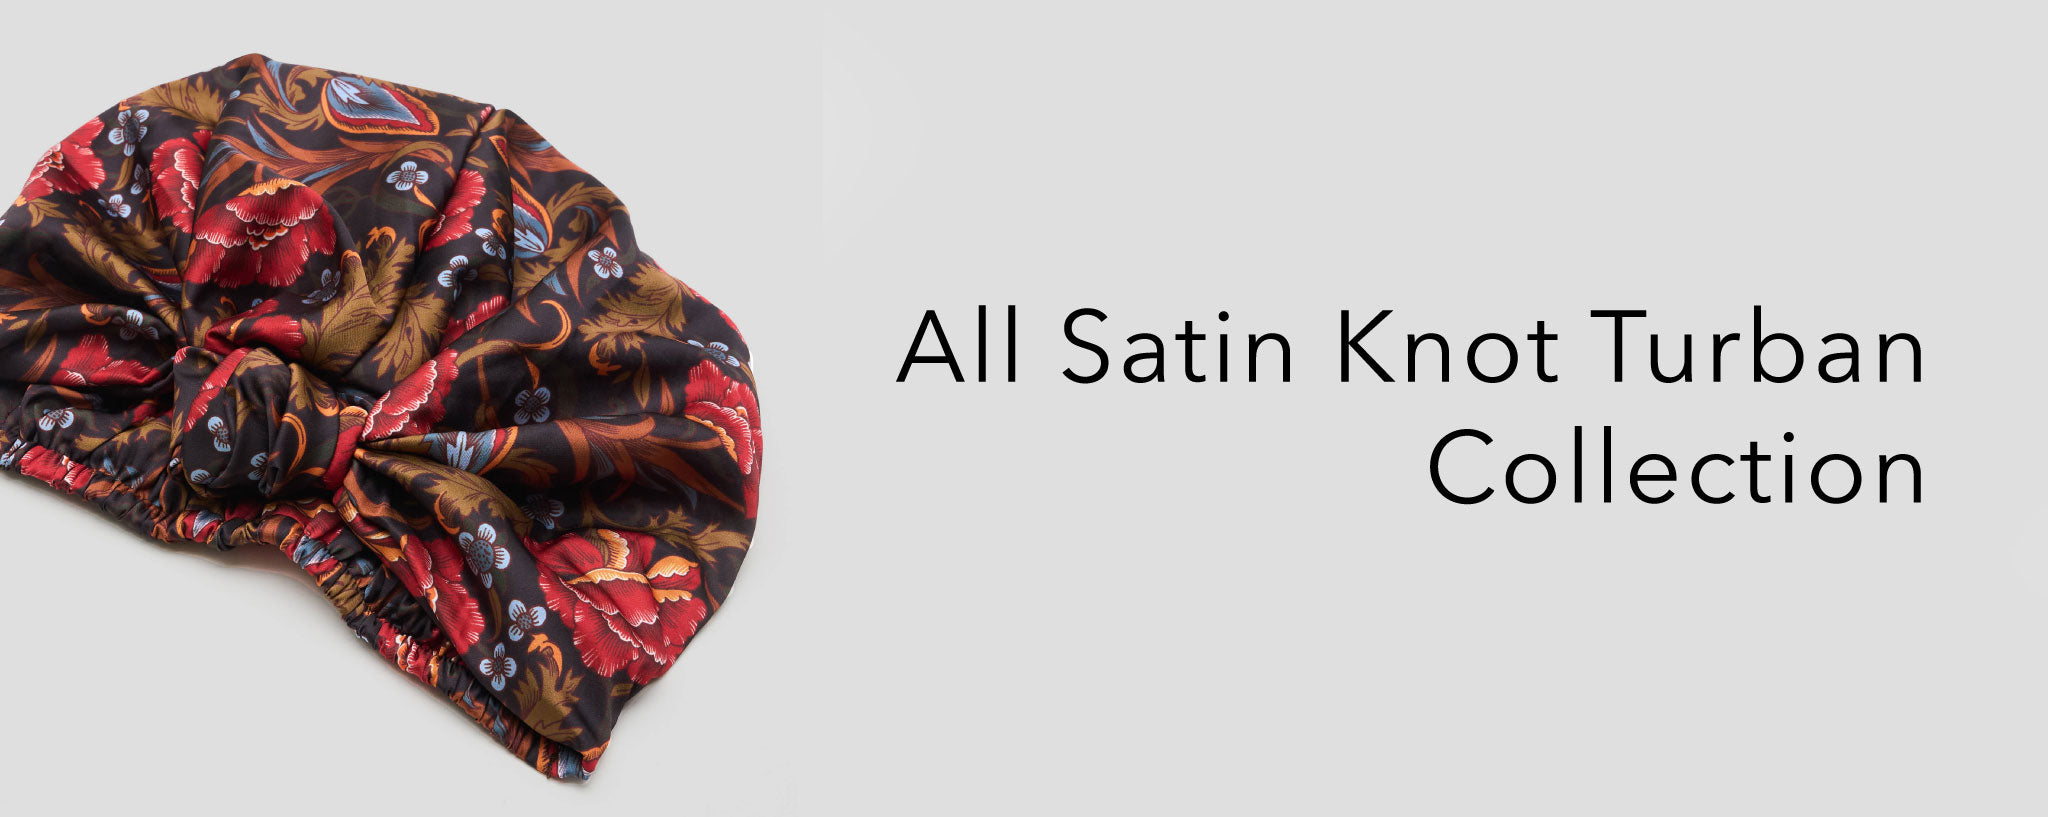 All Satin Knot Turban